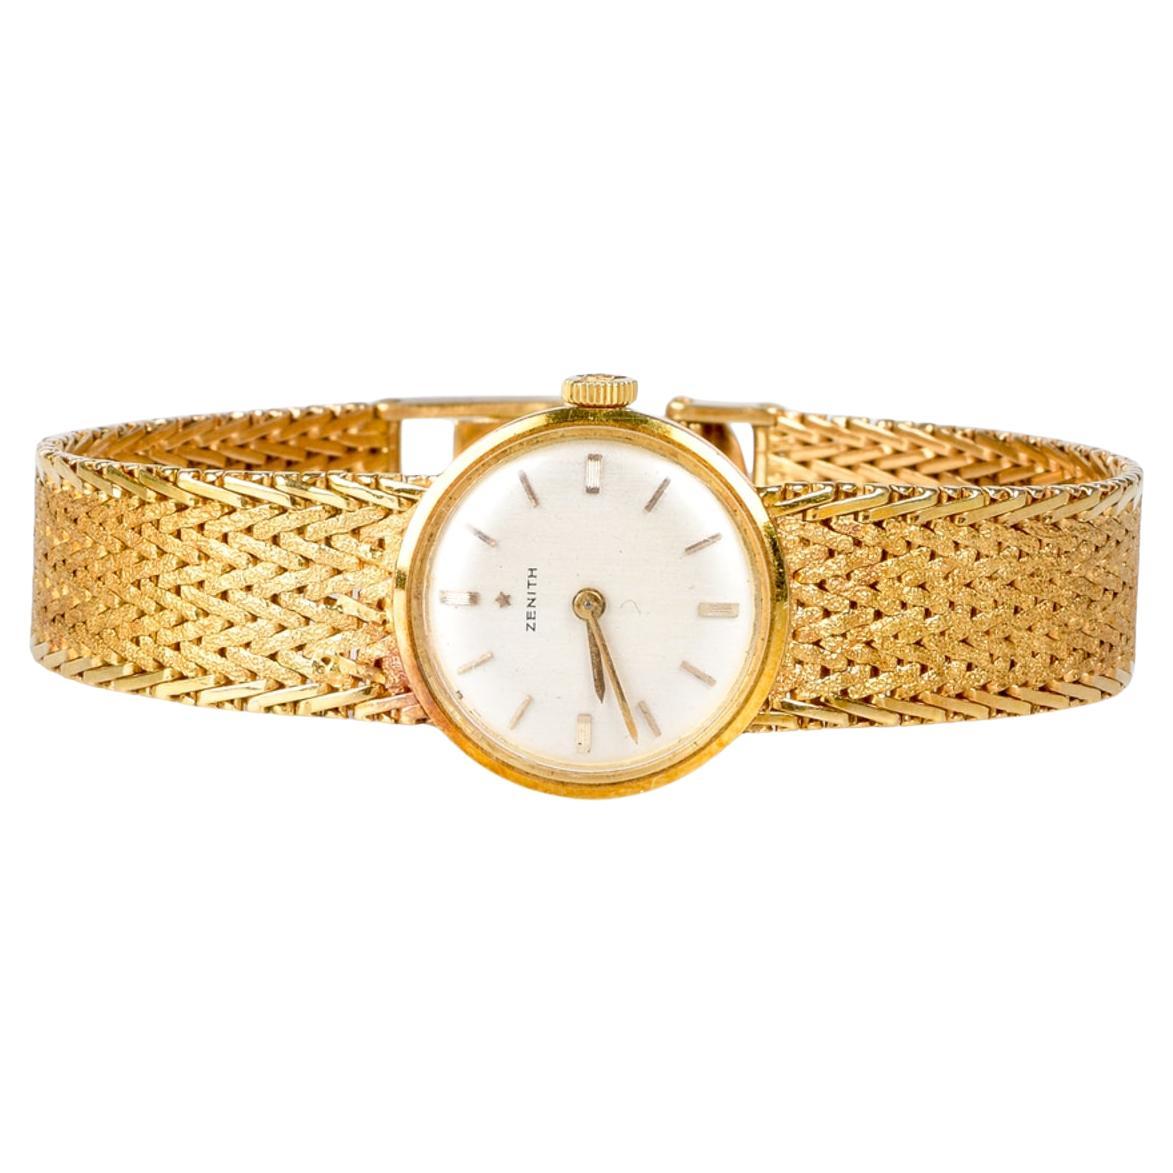 ZENITH watch in 18-carat yellow gold. 